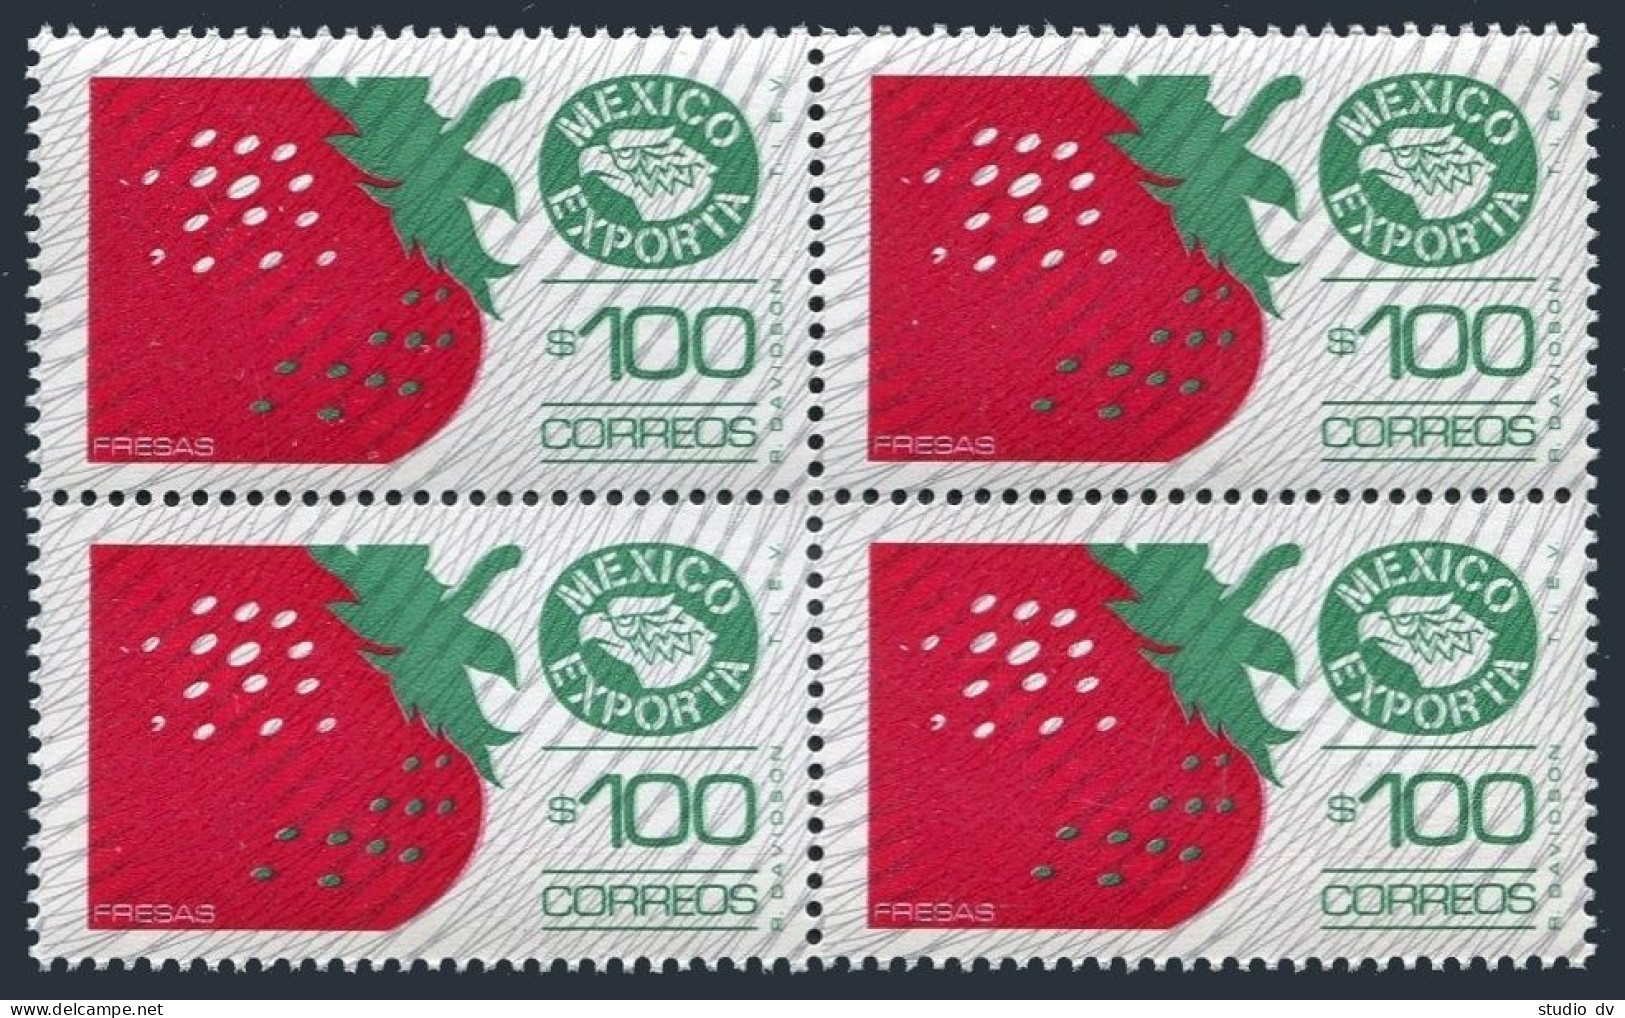 Mexico 1134 Block/4,MNH.Michel 1803Aax. Mexico Exports,1983. Strawberry. - Mexique